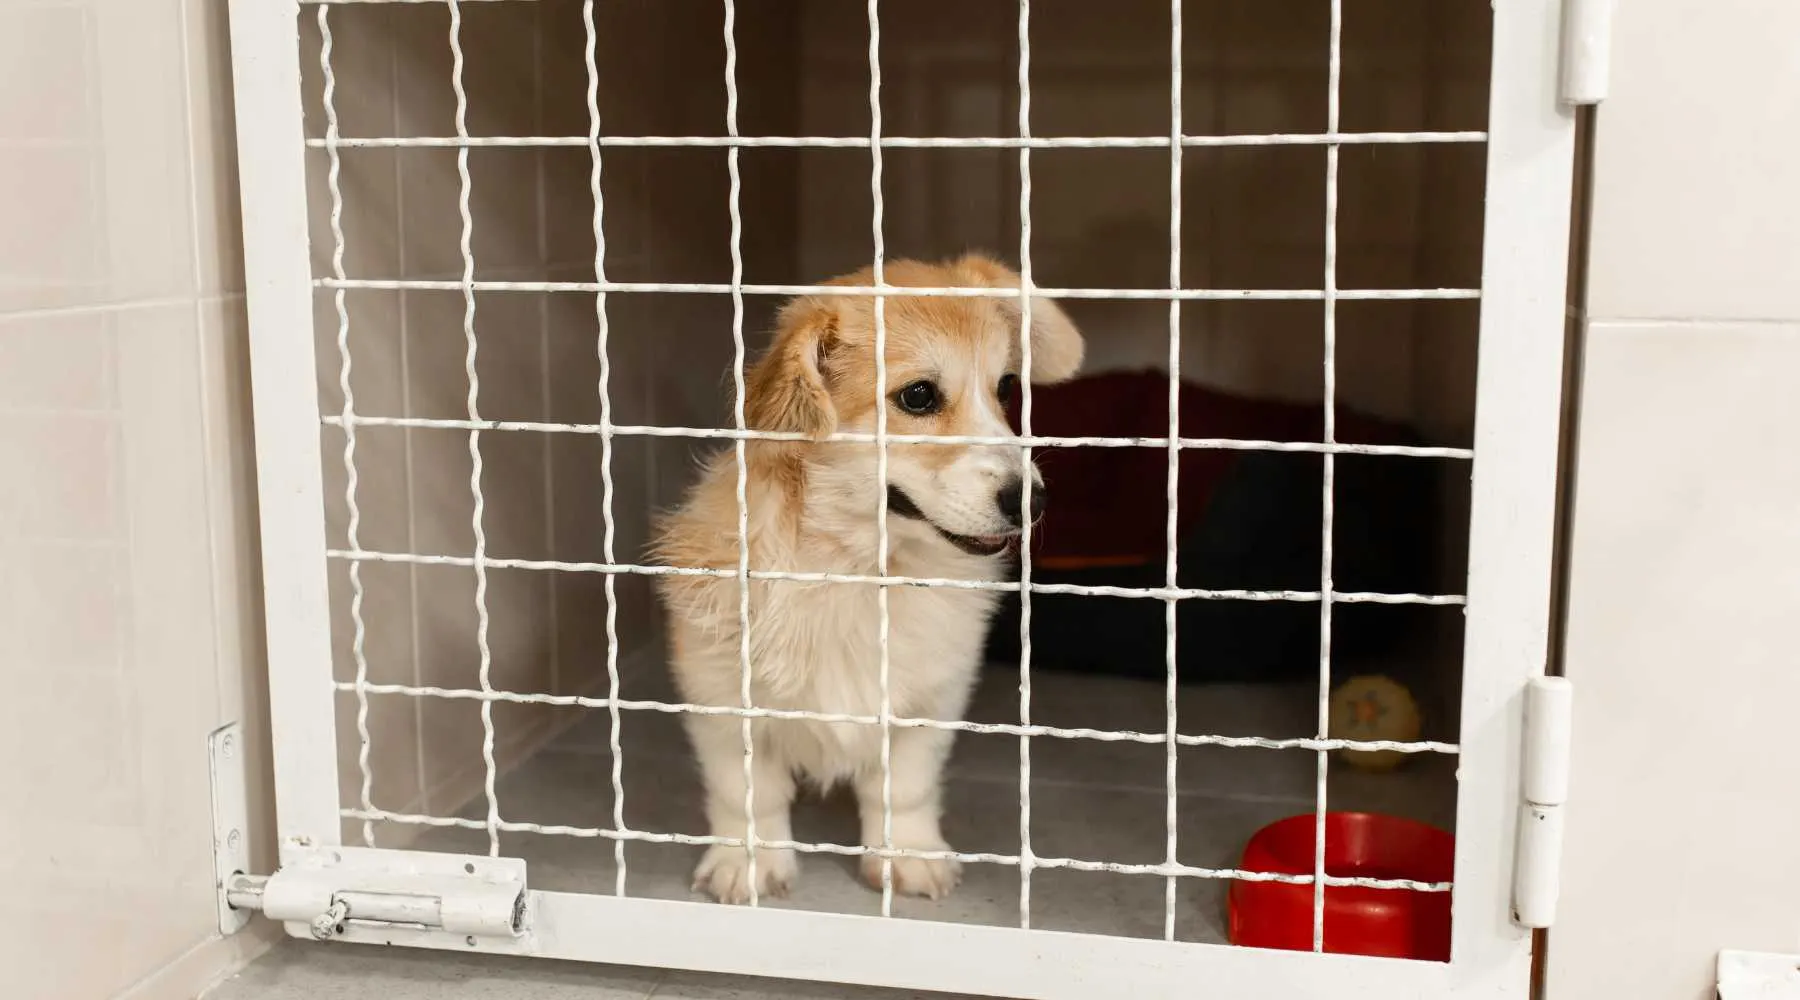 Corgi dog behind gate in pet shelter_Canva_1800x1000